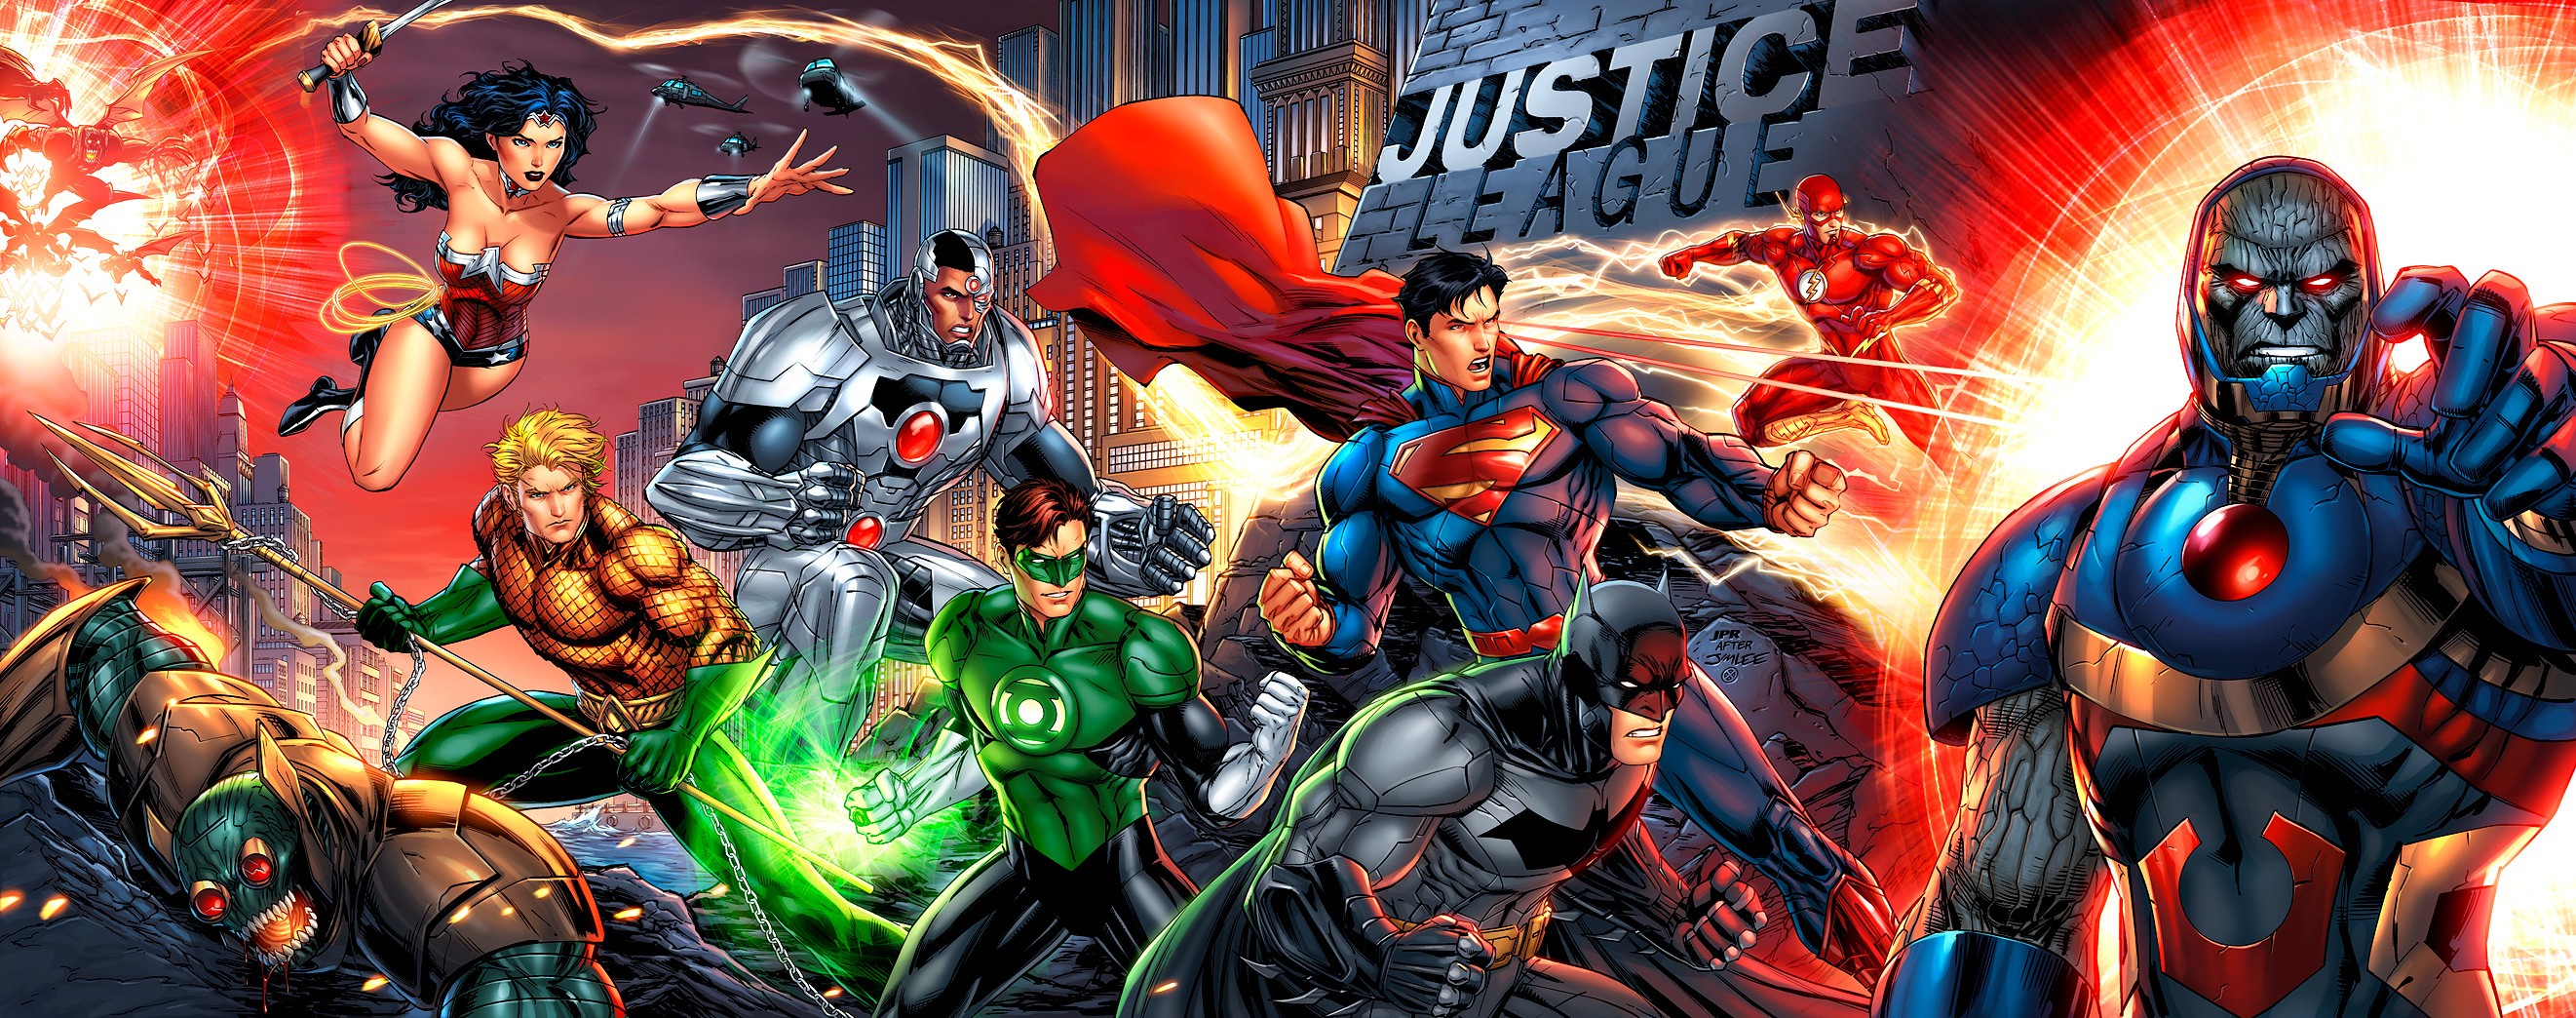 General 2643x1044 Superman Composite Superman Batman DC Comics Justice League Green Lantern Wonder Woman Aquaman cyborg Darkseid comic art DeviantArt The Flash